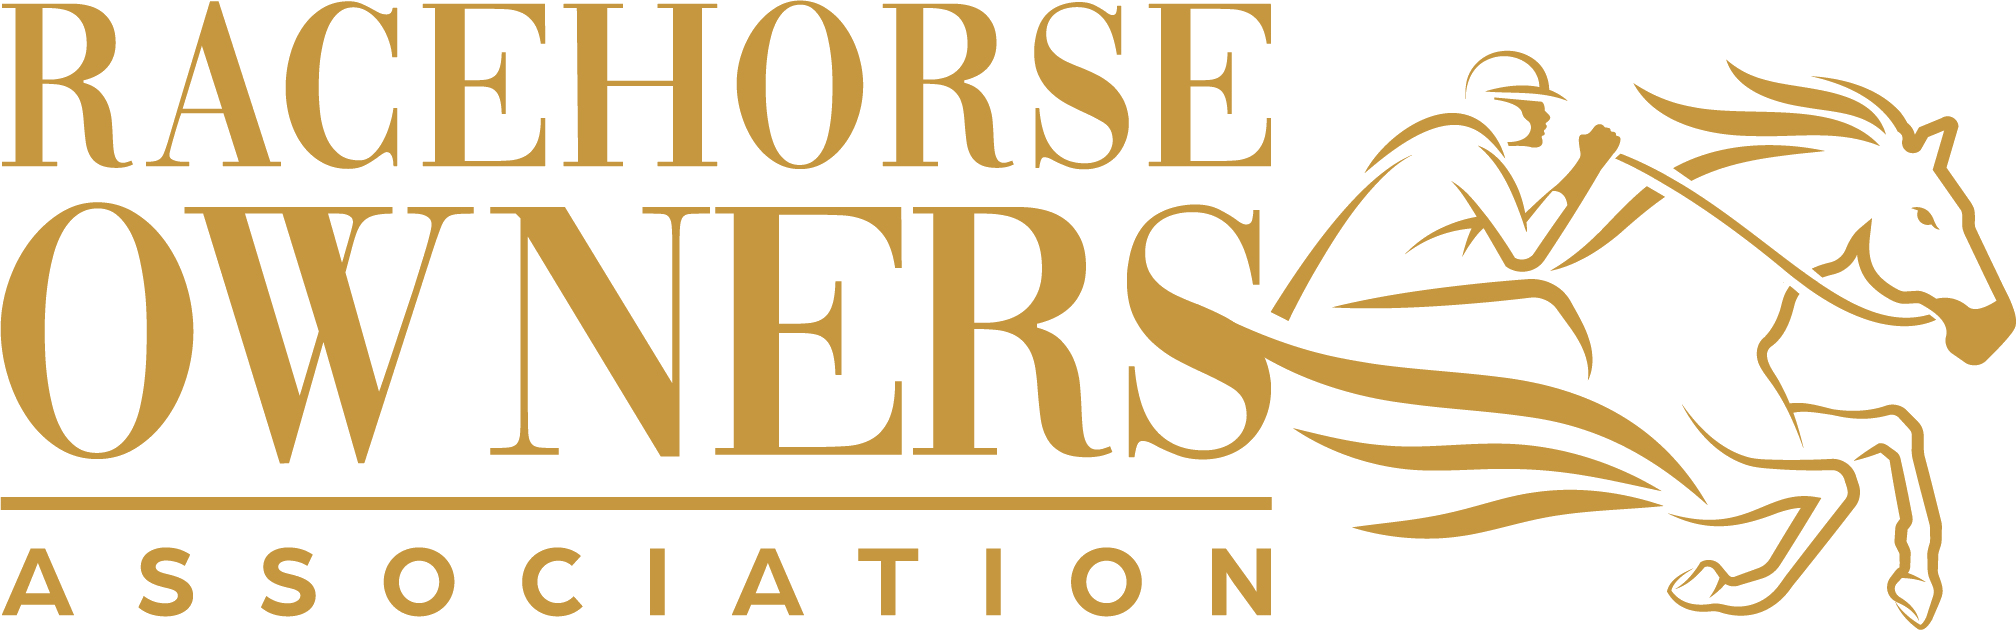 Racer Association logo